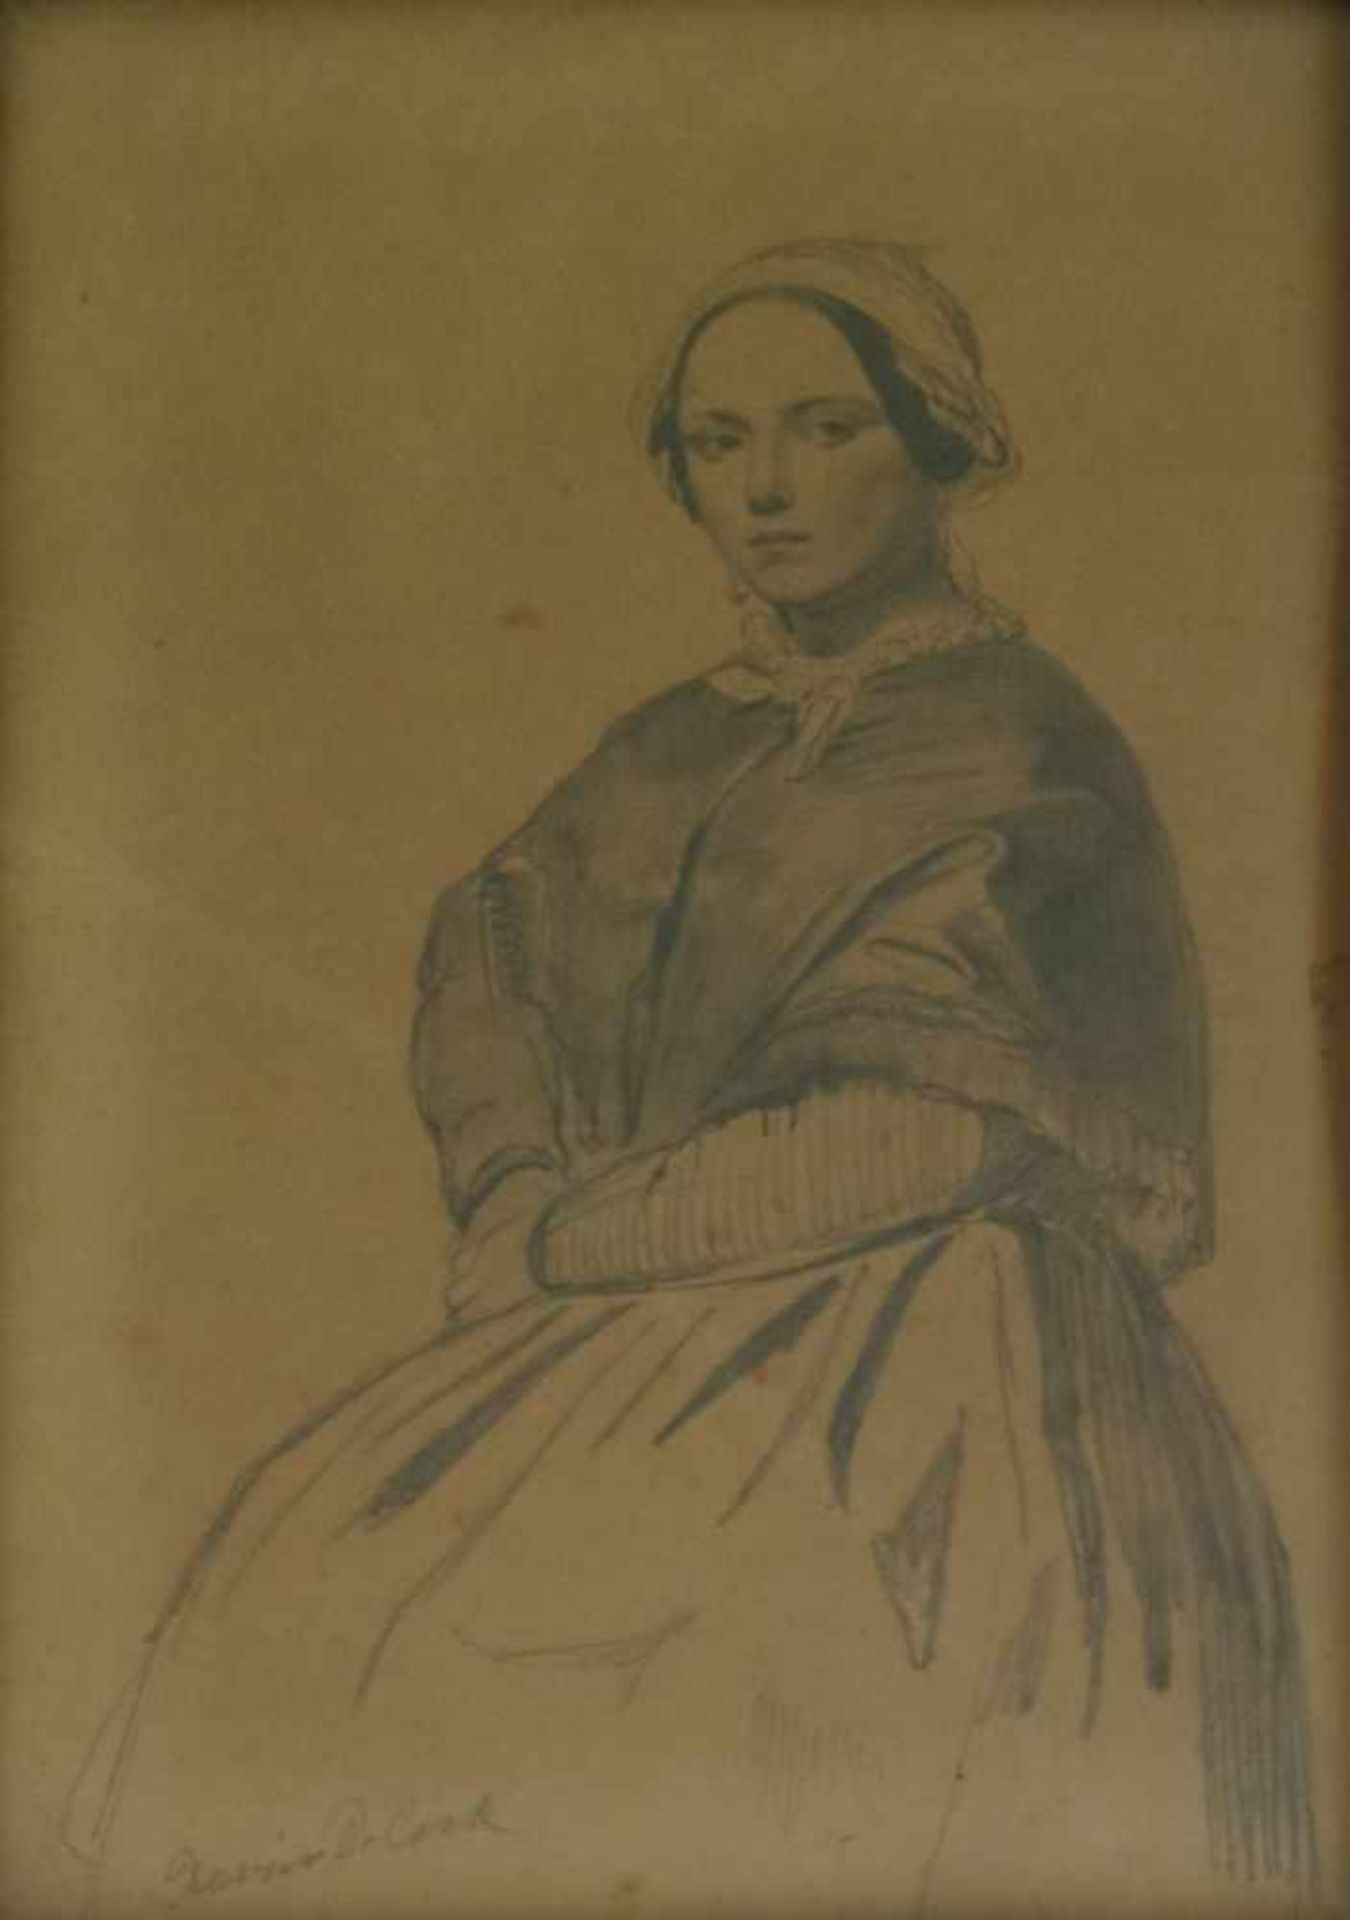 Xavier DE COCK (1818-1896) pencil drawing Seated woman 14 x 20 cm